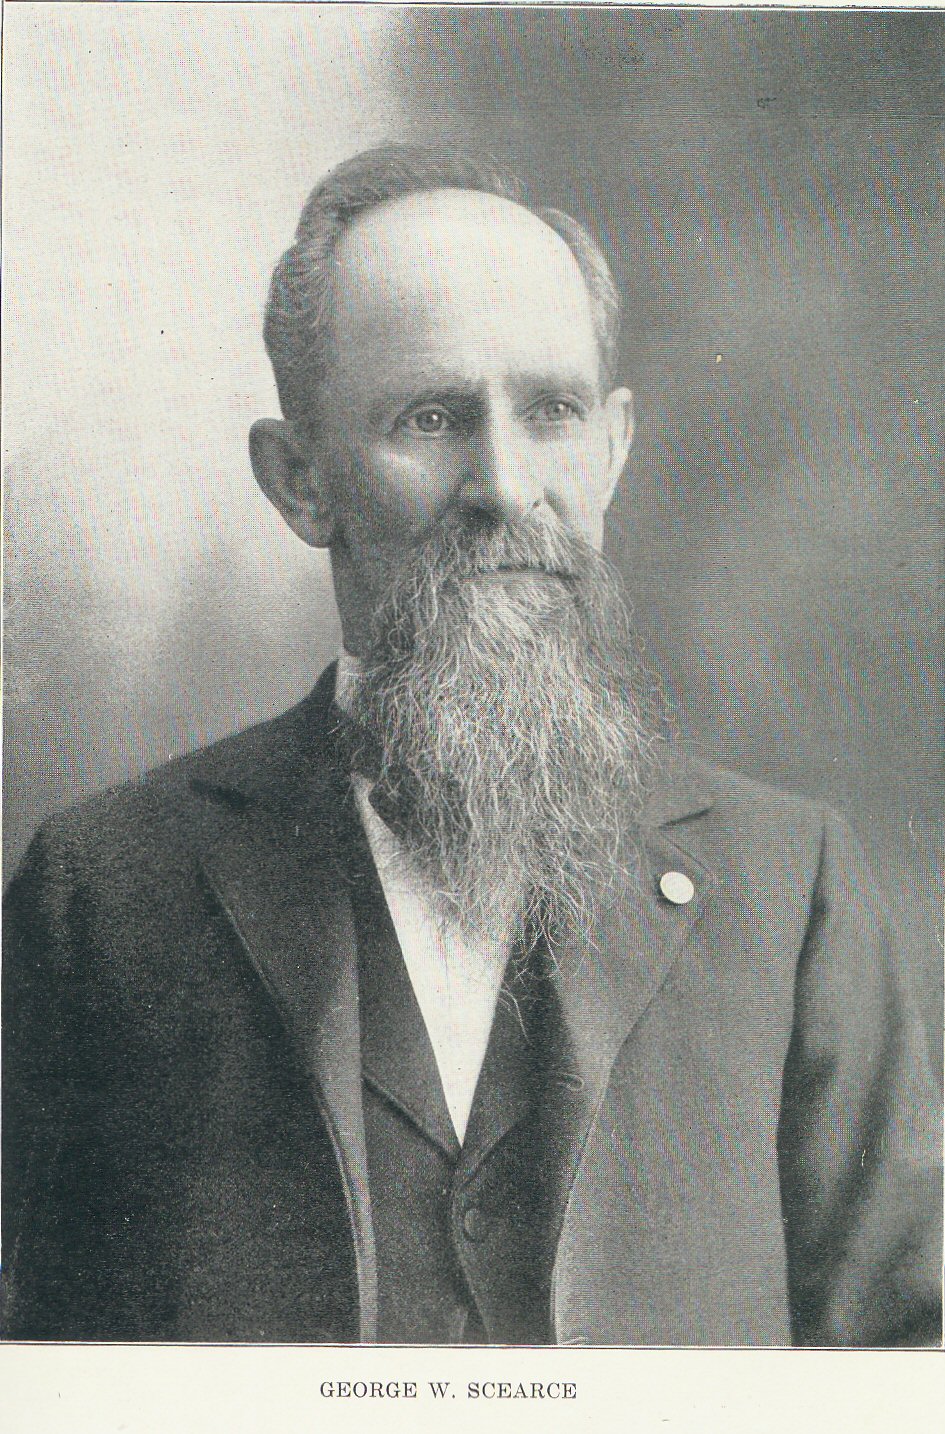 George W. Scearce